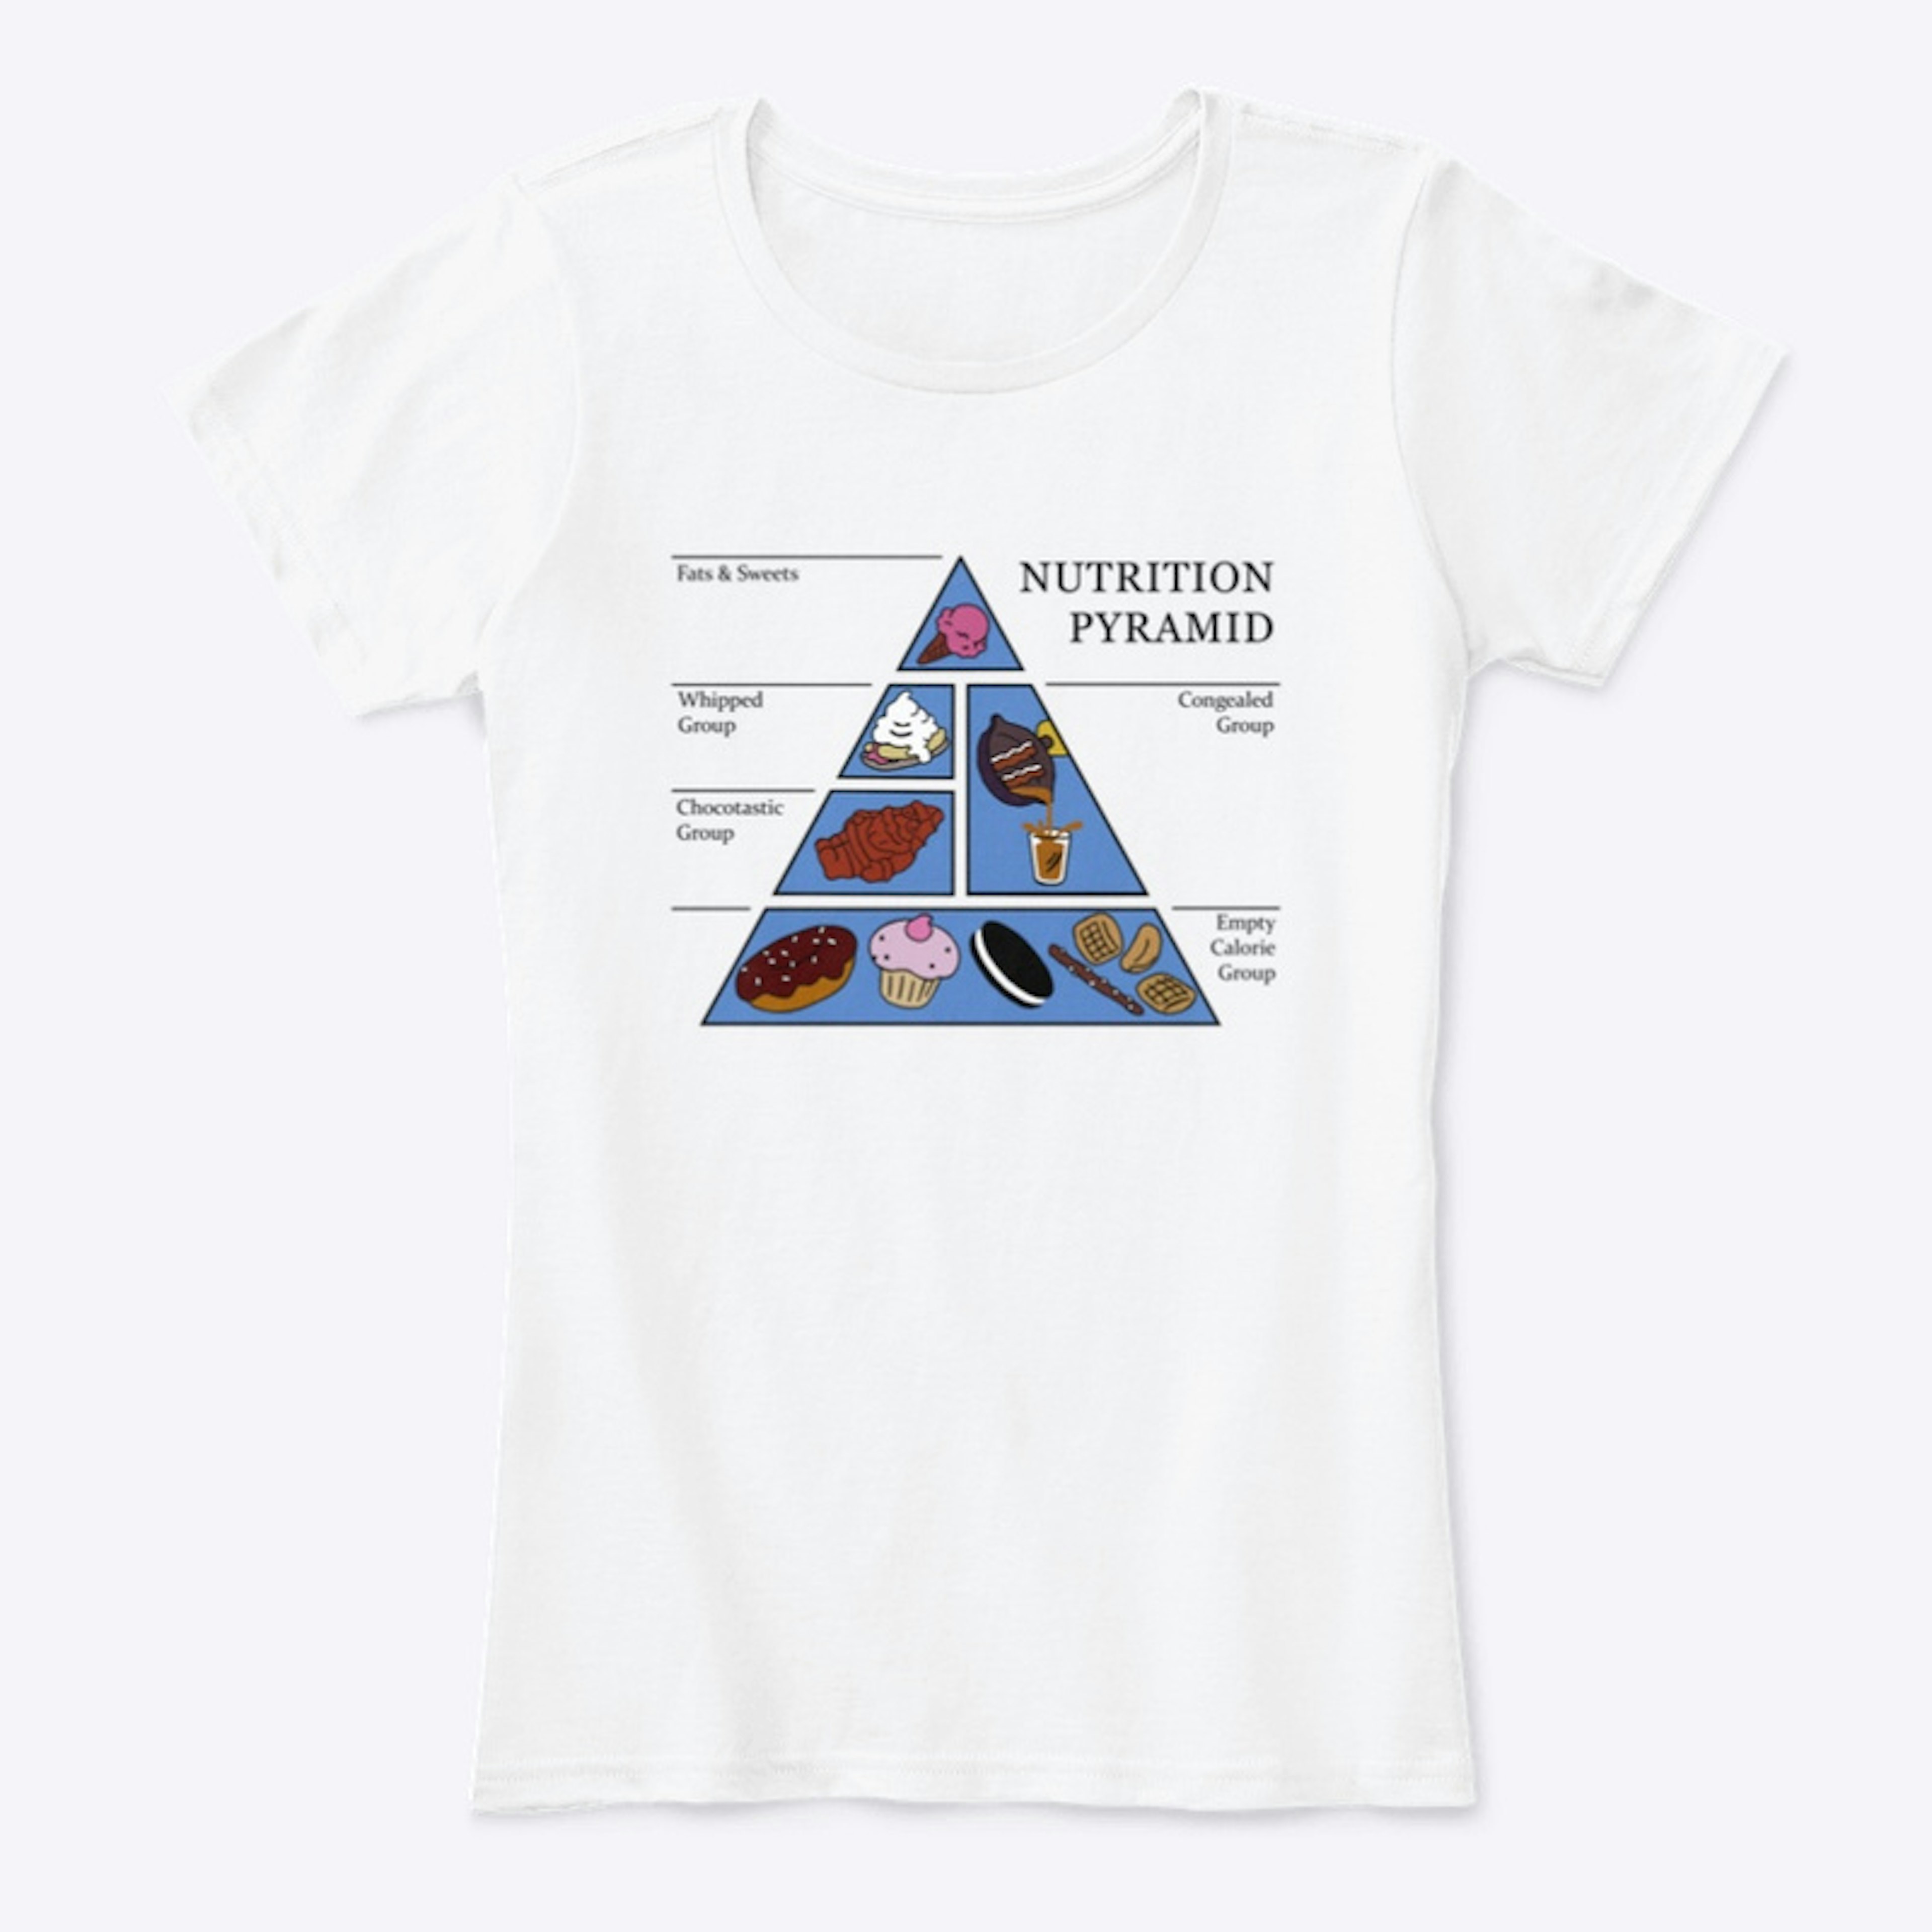 The Nutrition Pyramid